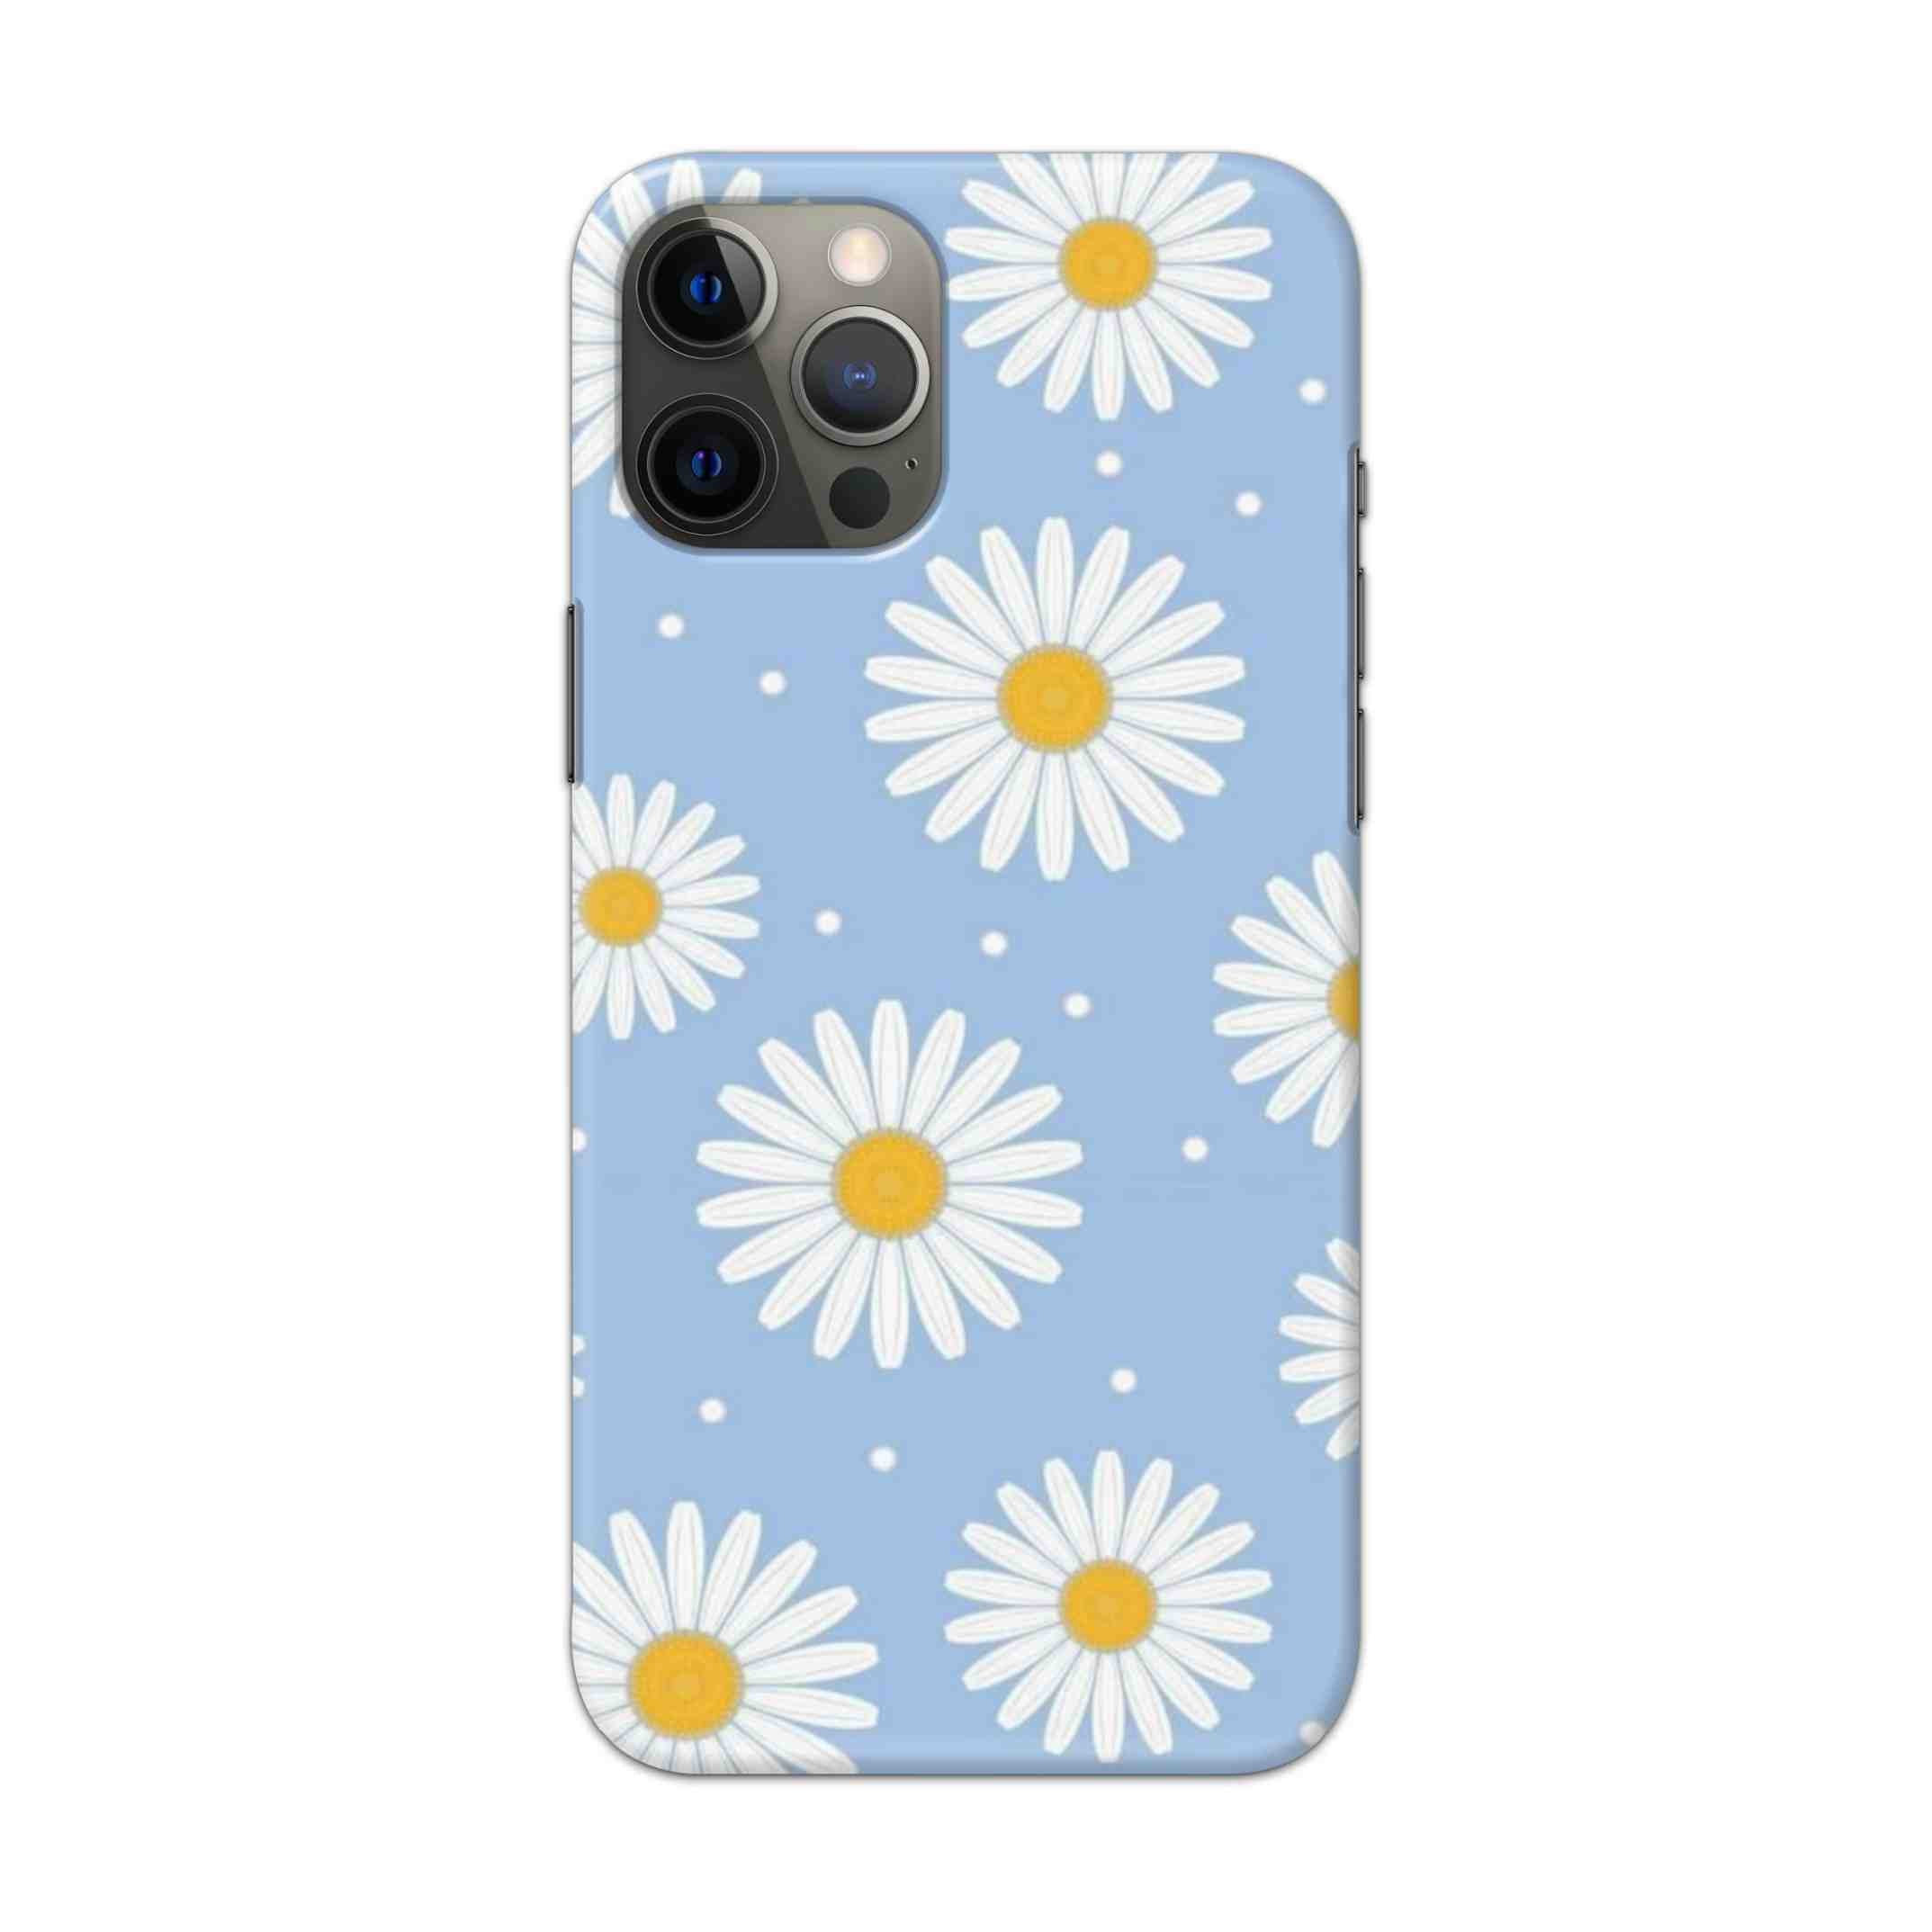 Buy White Sunflower Hard Back Mobile Phone Case Cover For Apple iPhone 12 pro Online